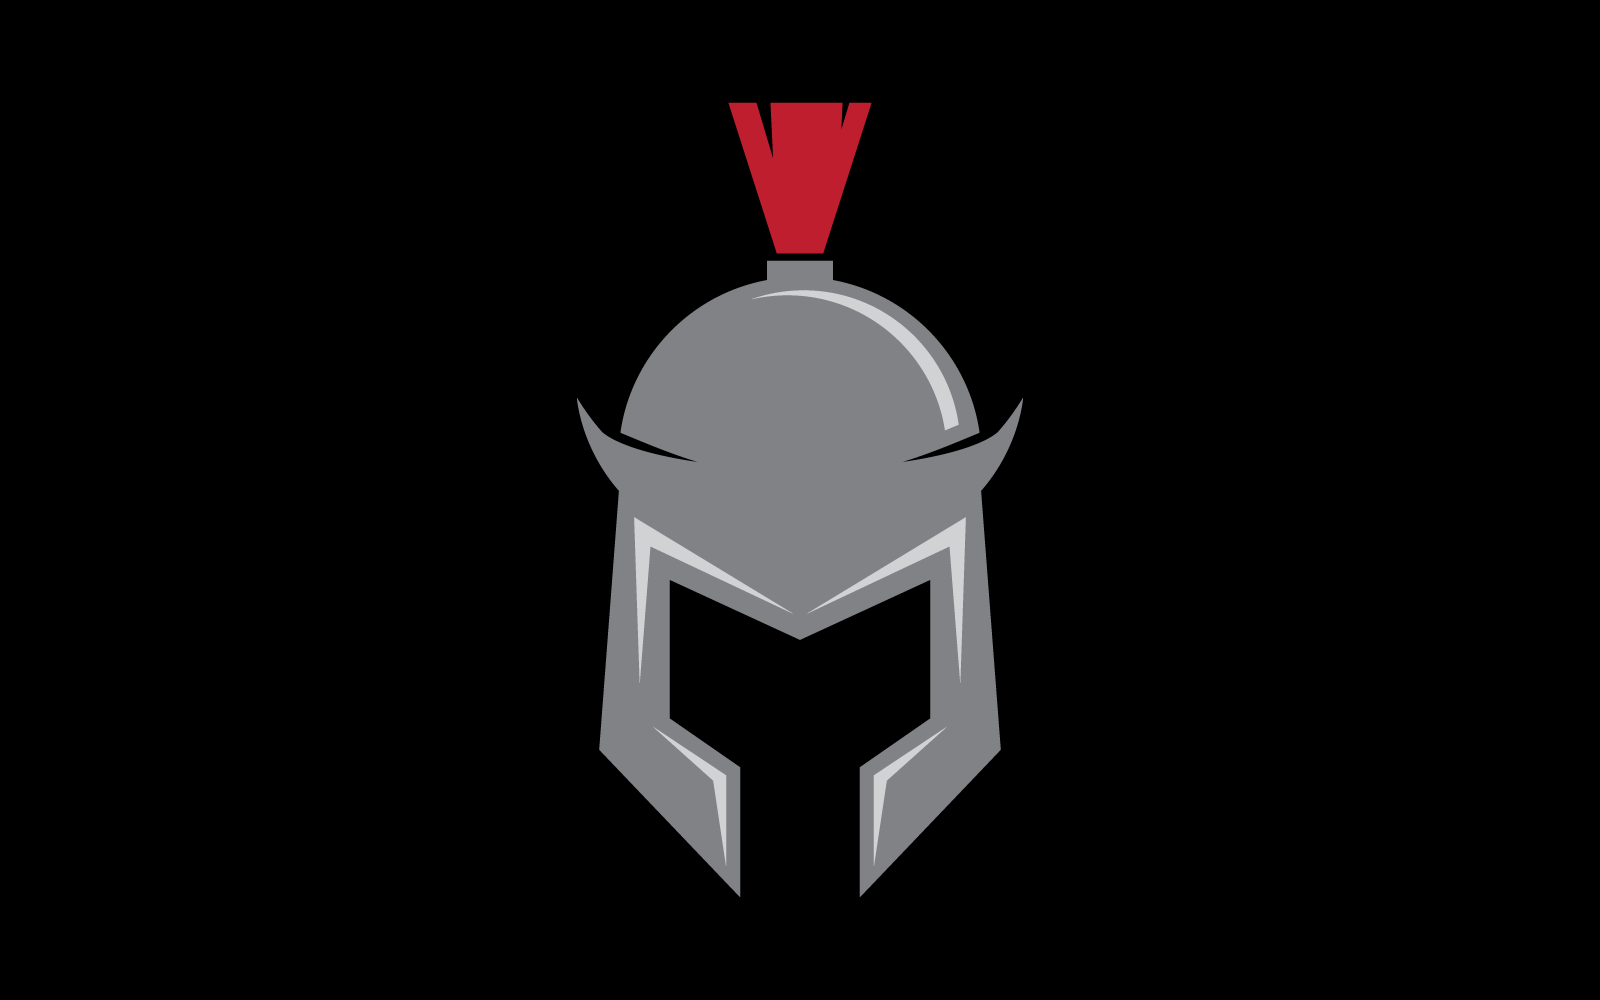 Spartan gladiator logo illustration design